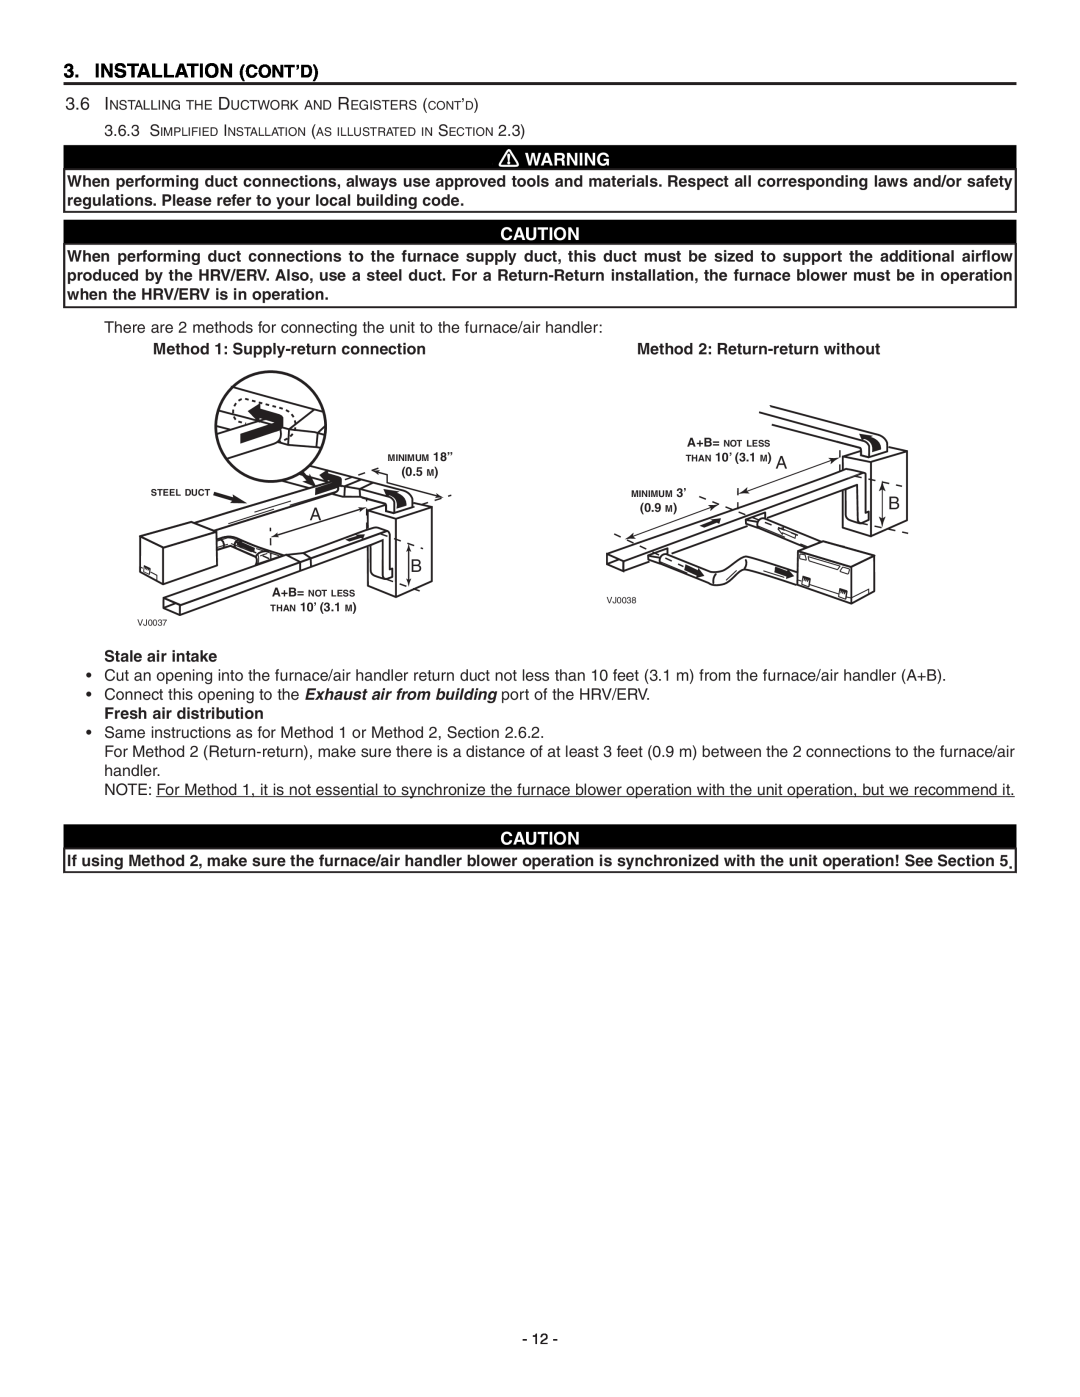 Broan ERV90HCT installation instructions Installation Cont’D 